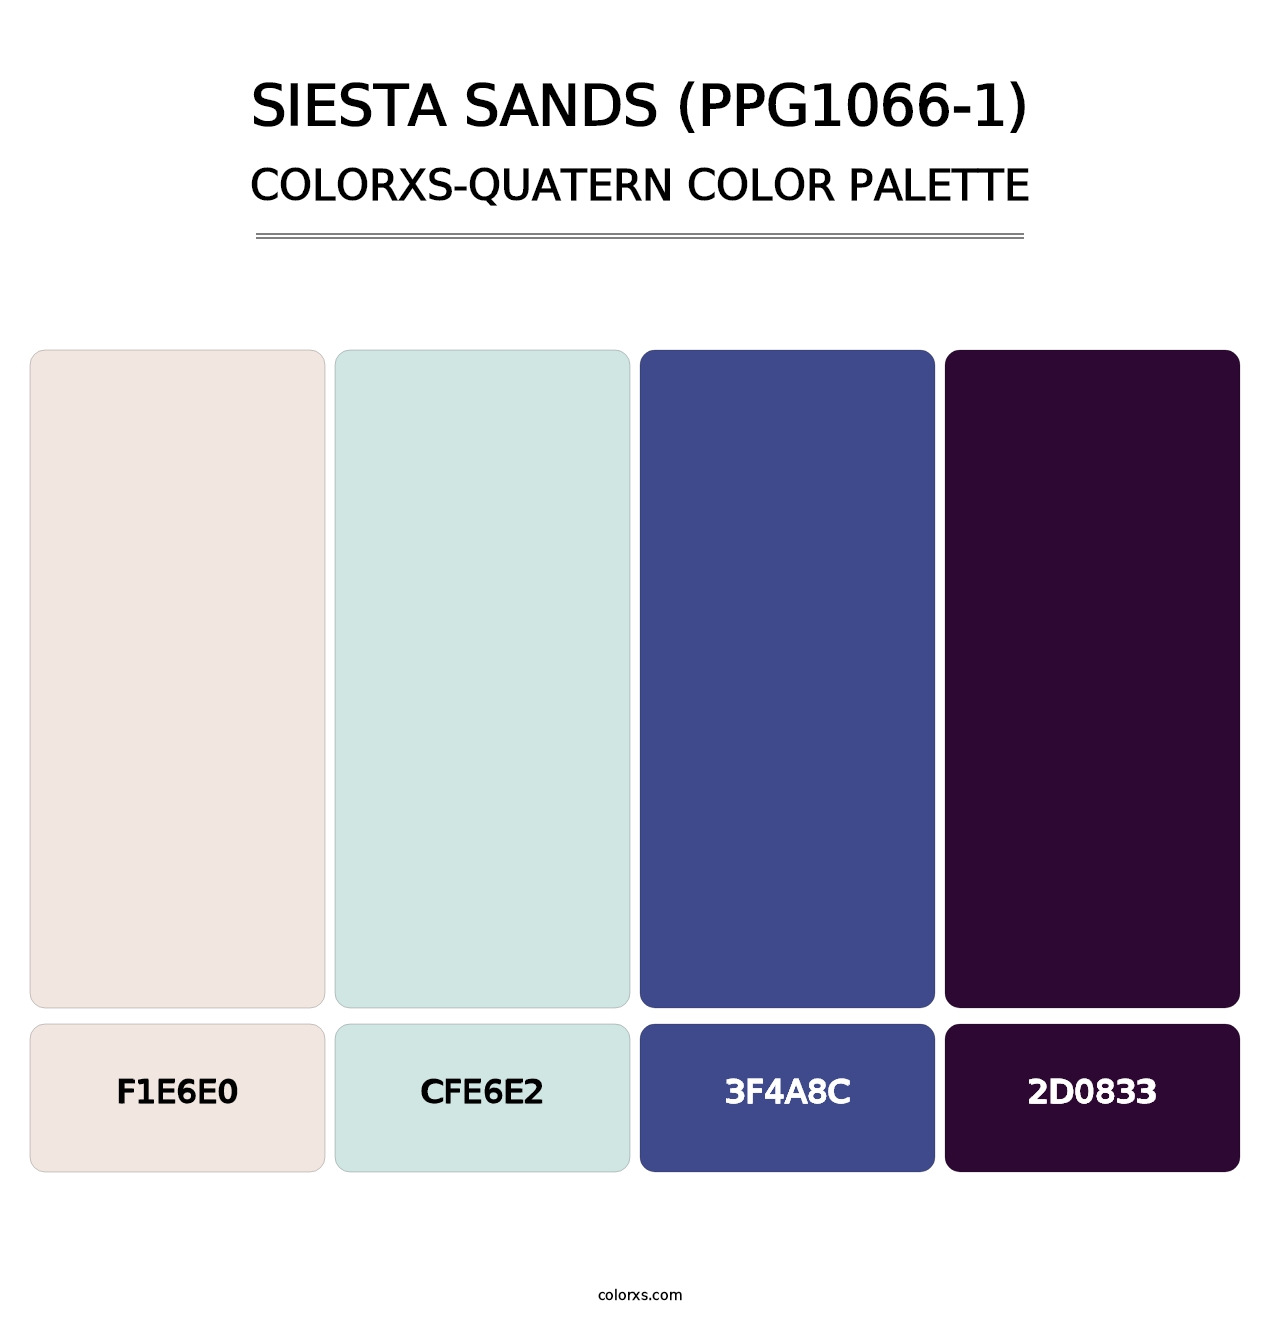 Siesta Sands (PPG1066-1) - Colorxs Quatern Palette